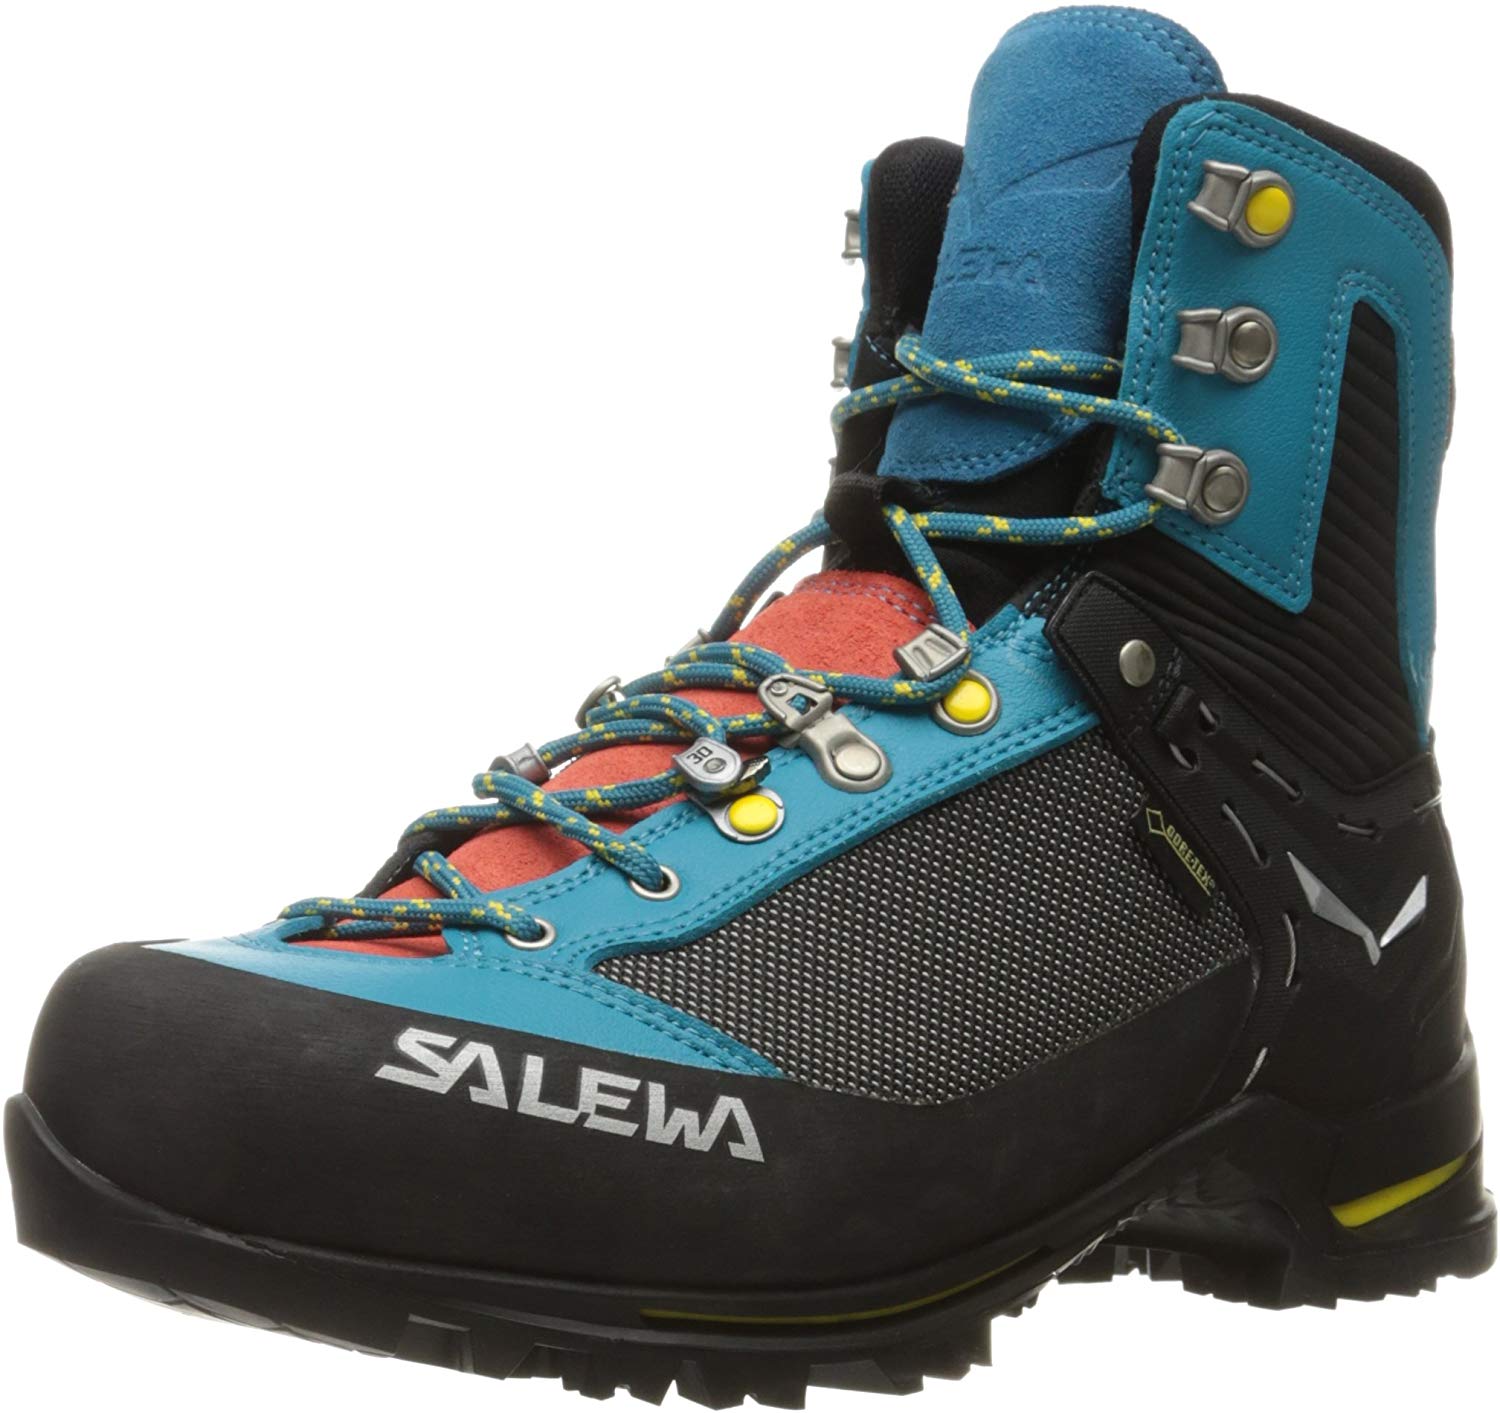 Salewa Women's Raven 2 GTX Mountaineering Boots